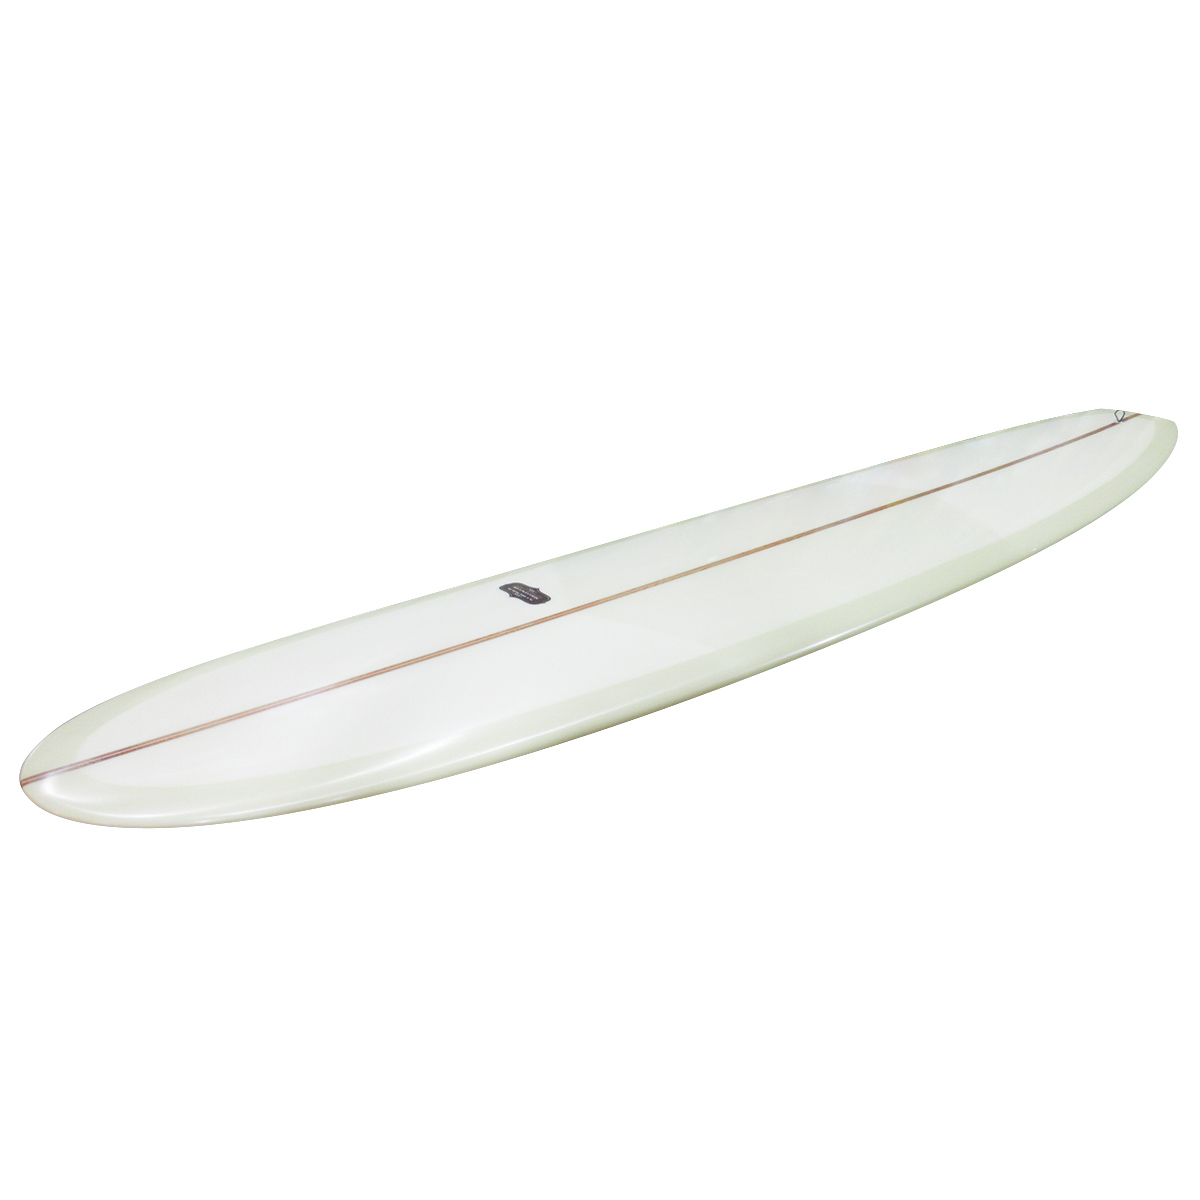 ALMOND SURFBOARDS / 9`8 Nathan Adams Model